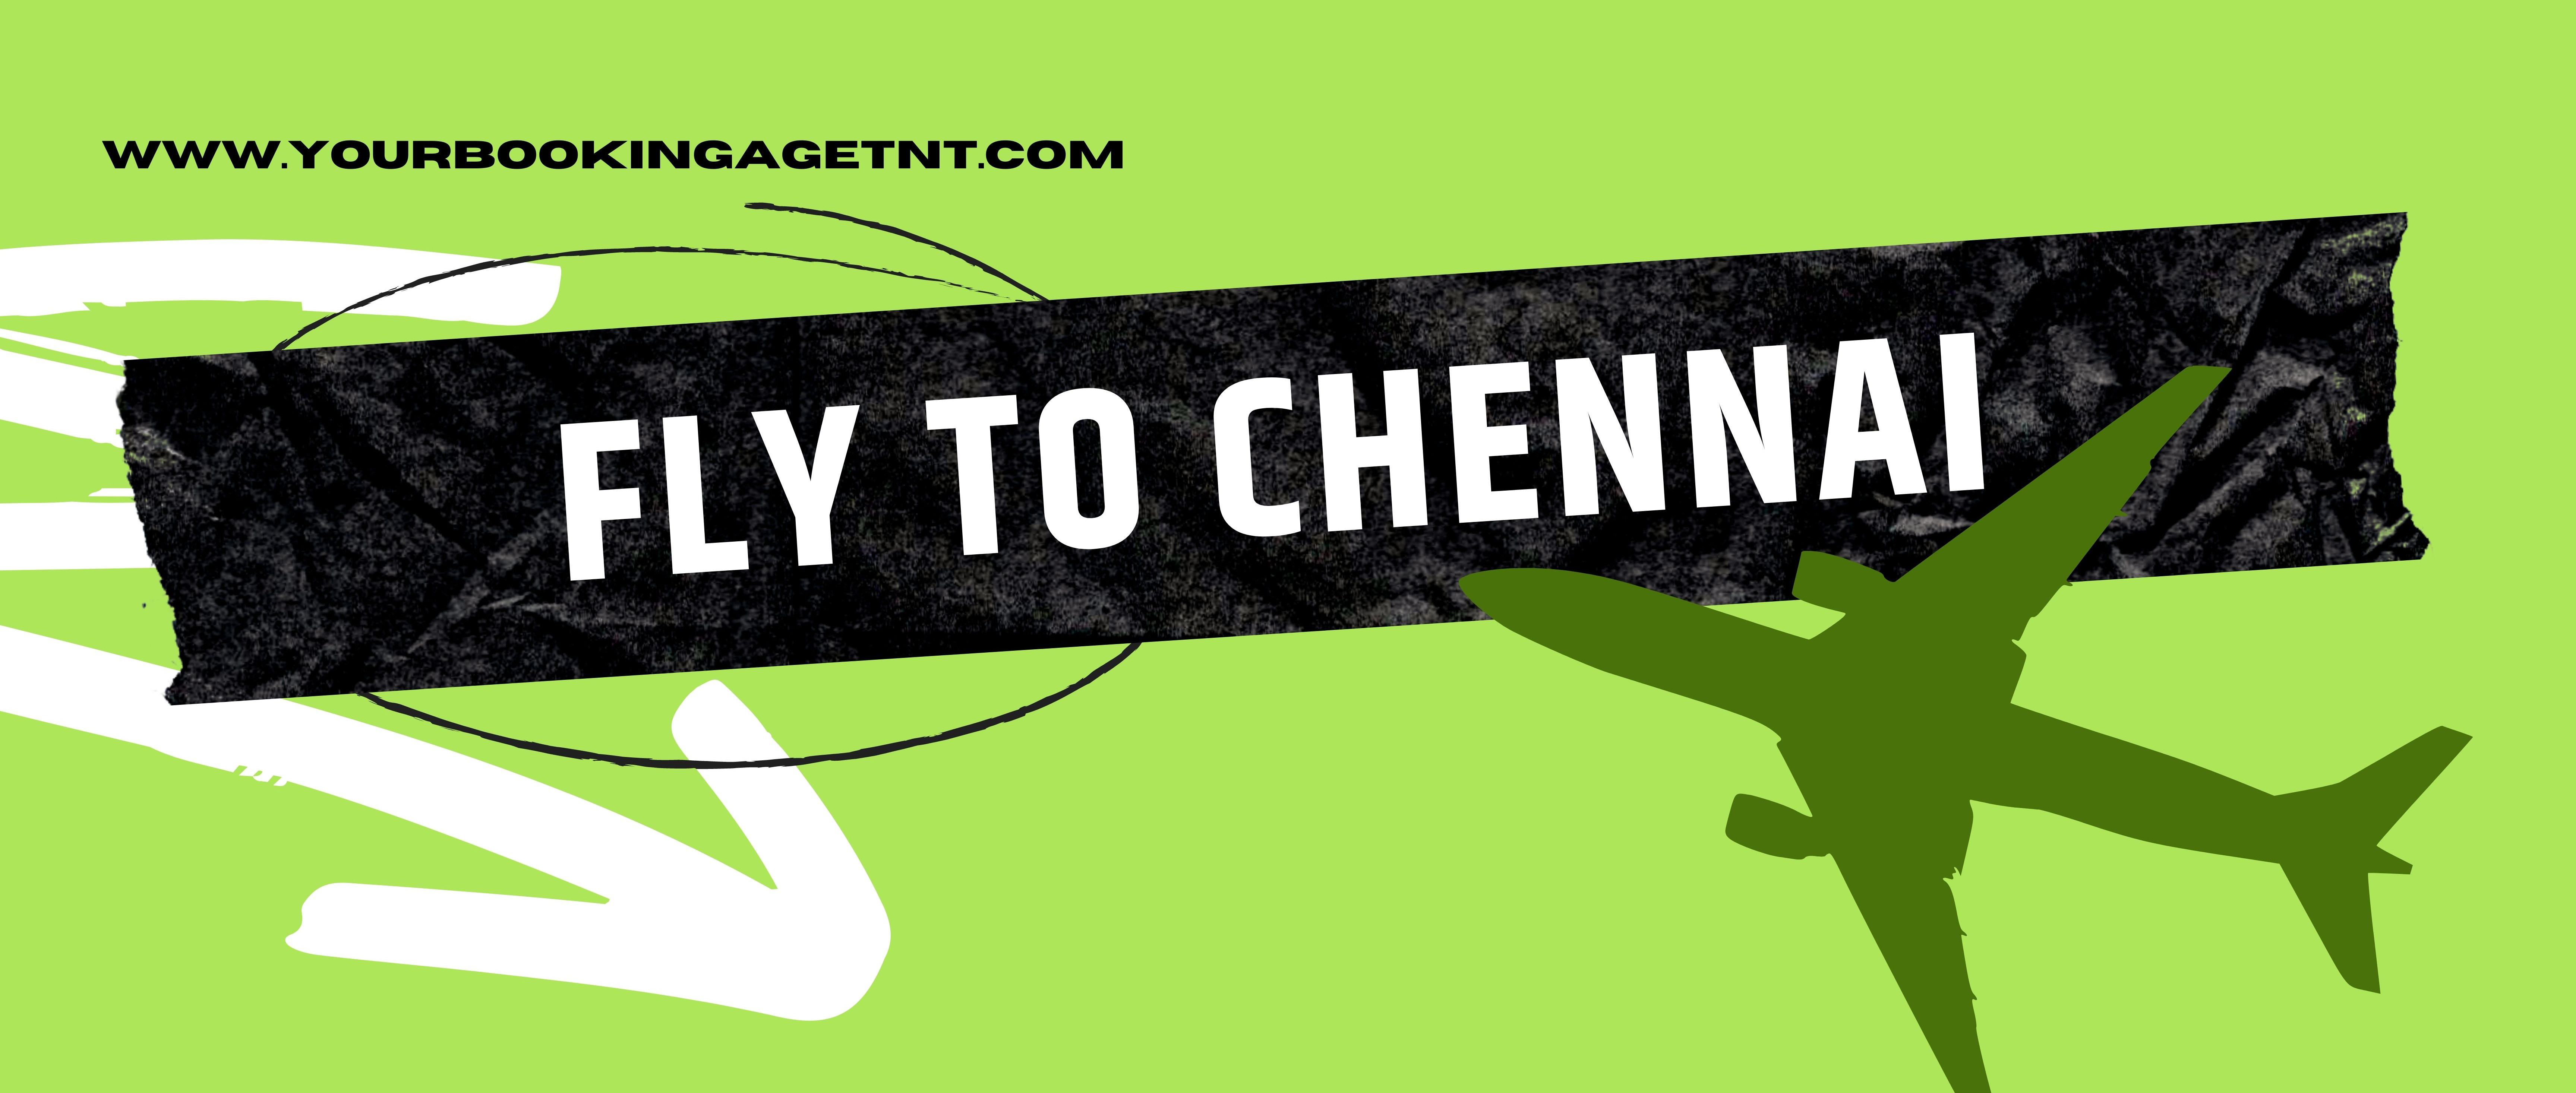 FLIGHT TO CHENNAI 